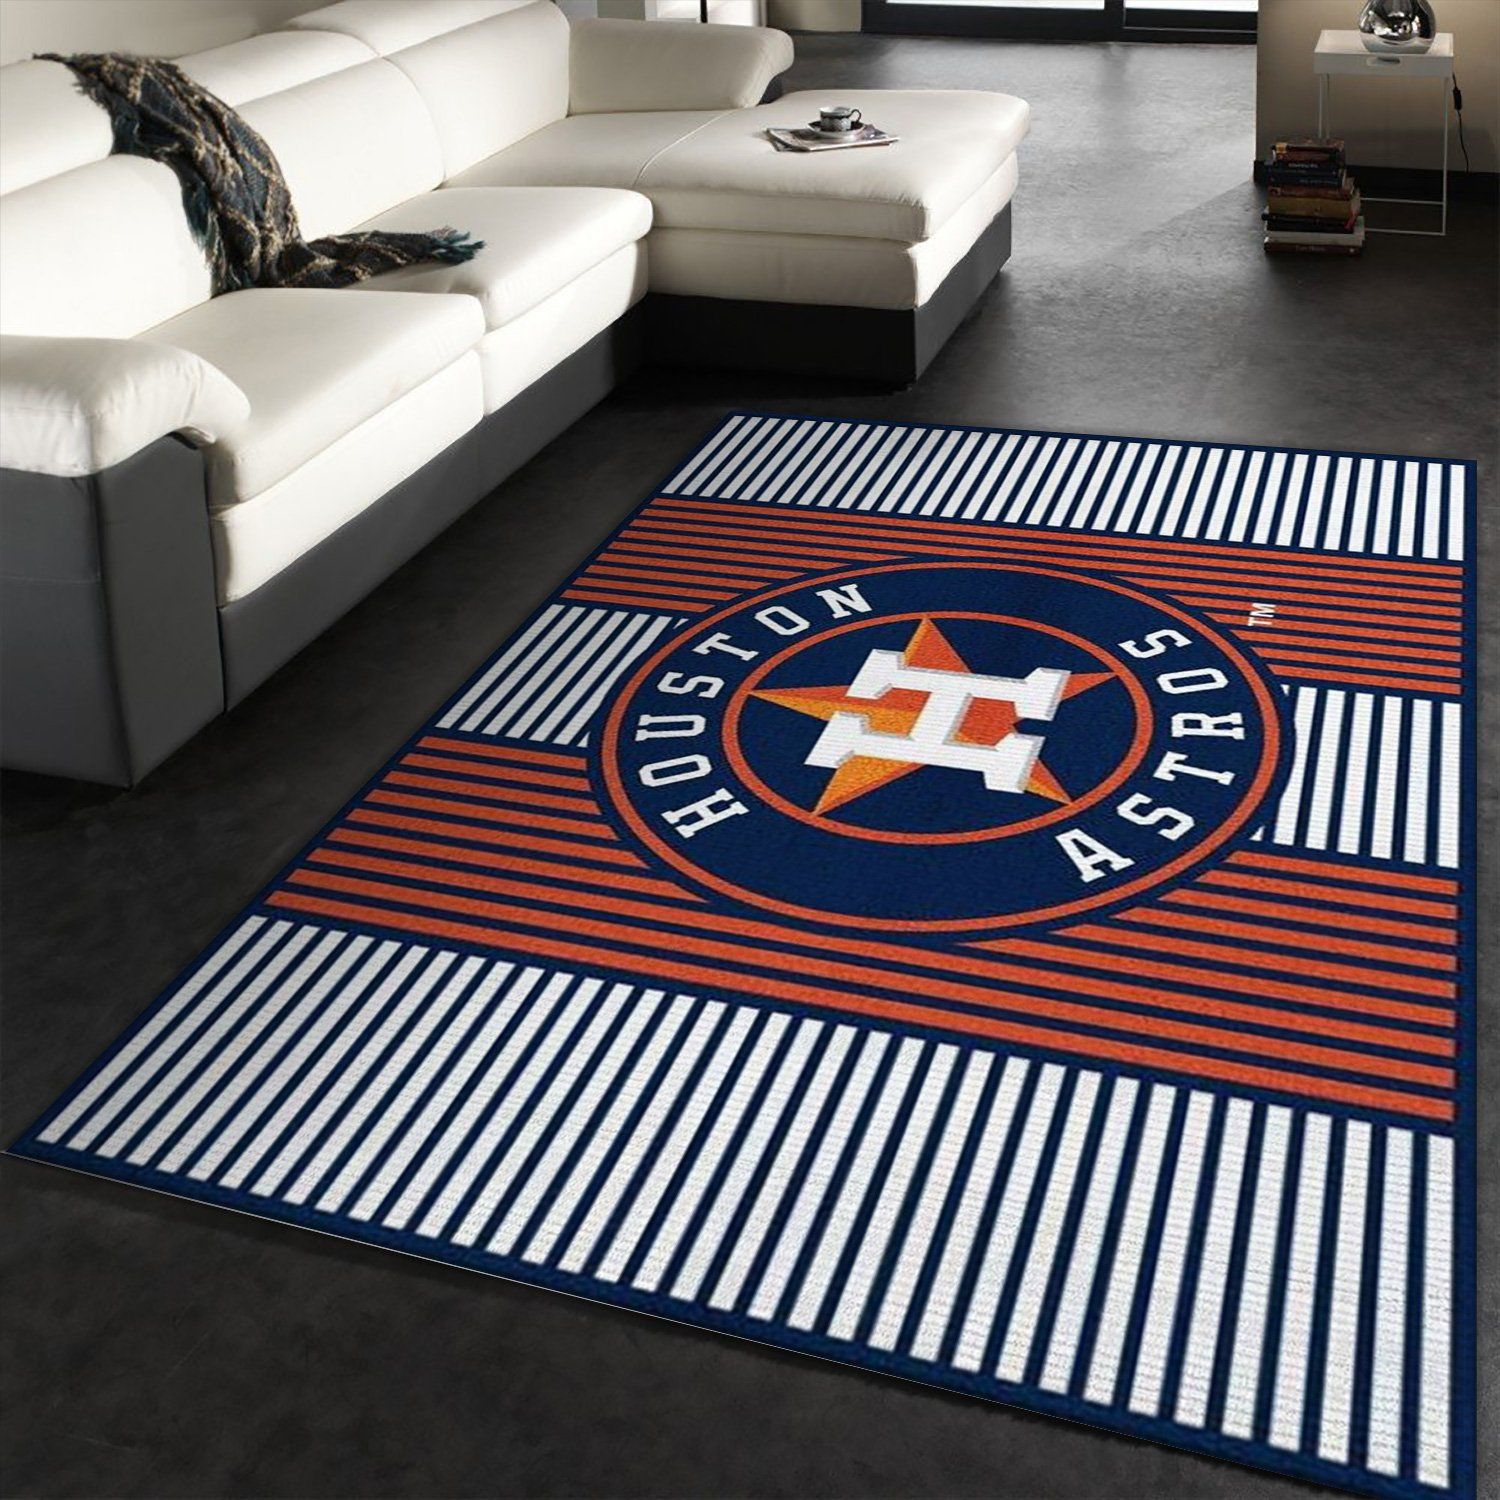 Houston Astros Imperial Champion Rug Mlb Team Logos Living Room And Bedroom Floor Decor Home Travels In Translation - Houston Astros Home Decor